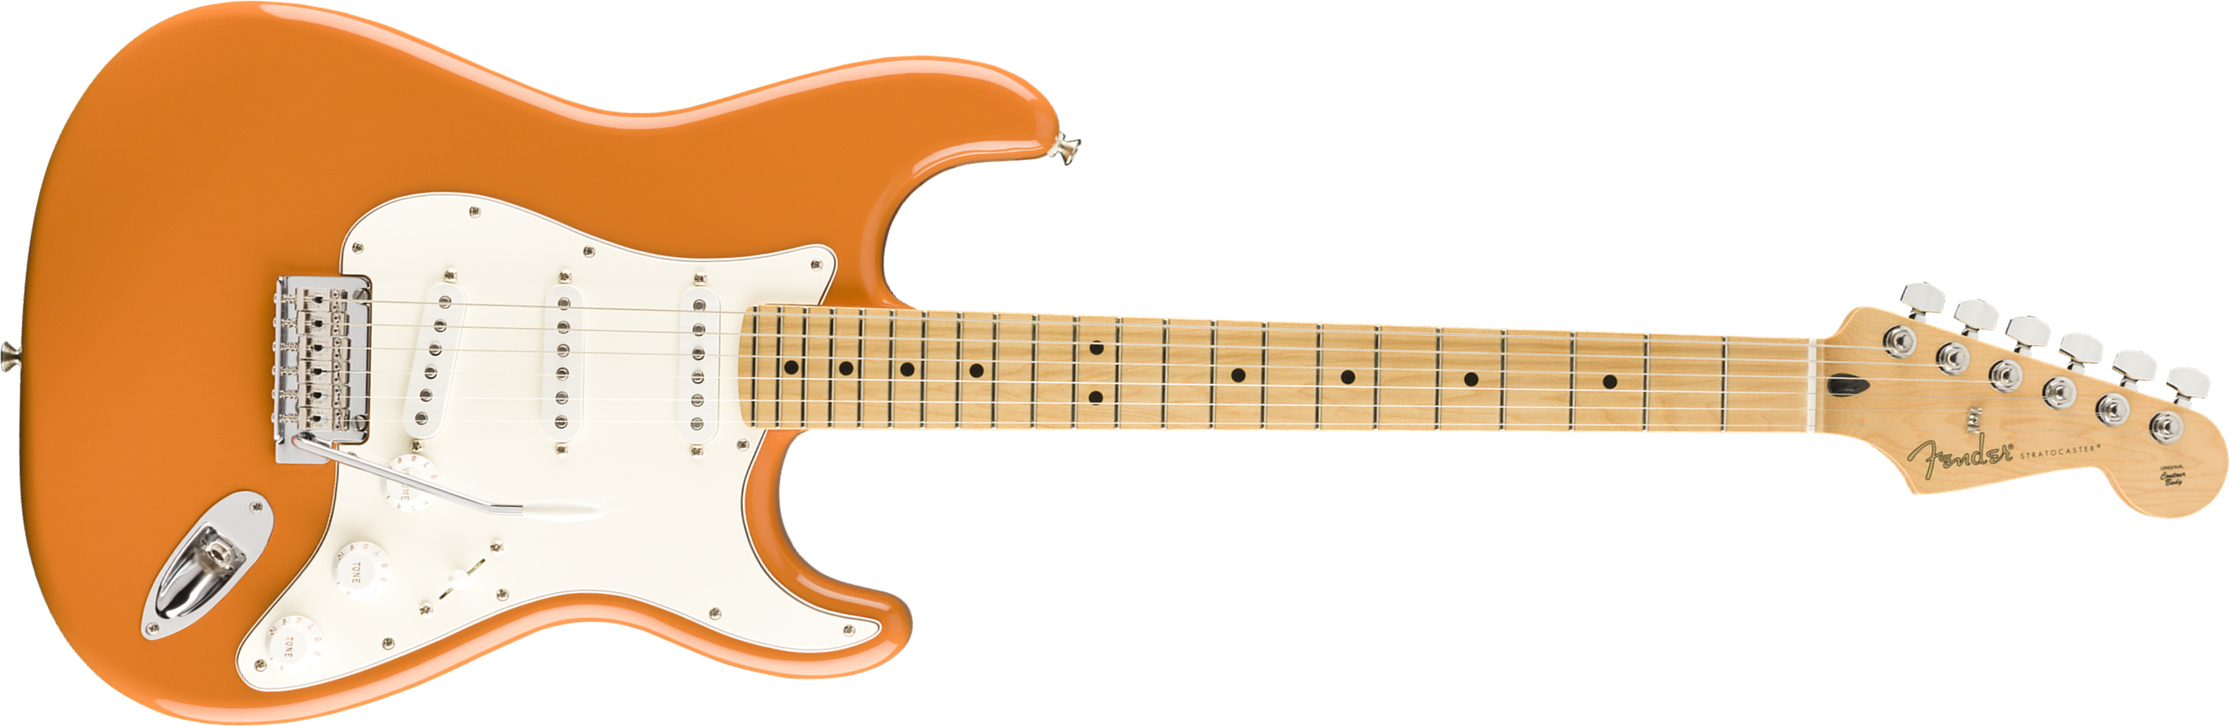 Fender Strat Player Mex Sss Mn - Capri Orange - Guitarra eléctrica con forma de str. - Main picture